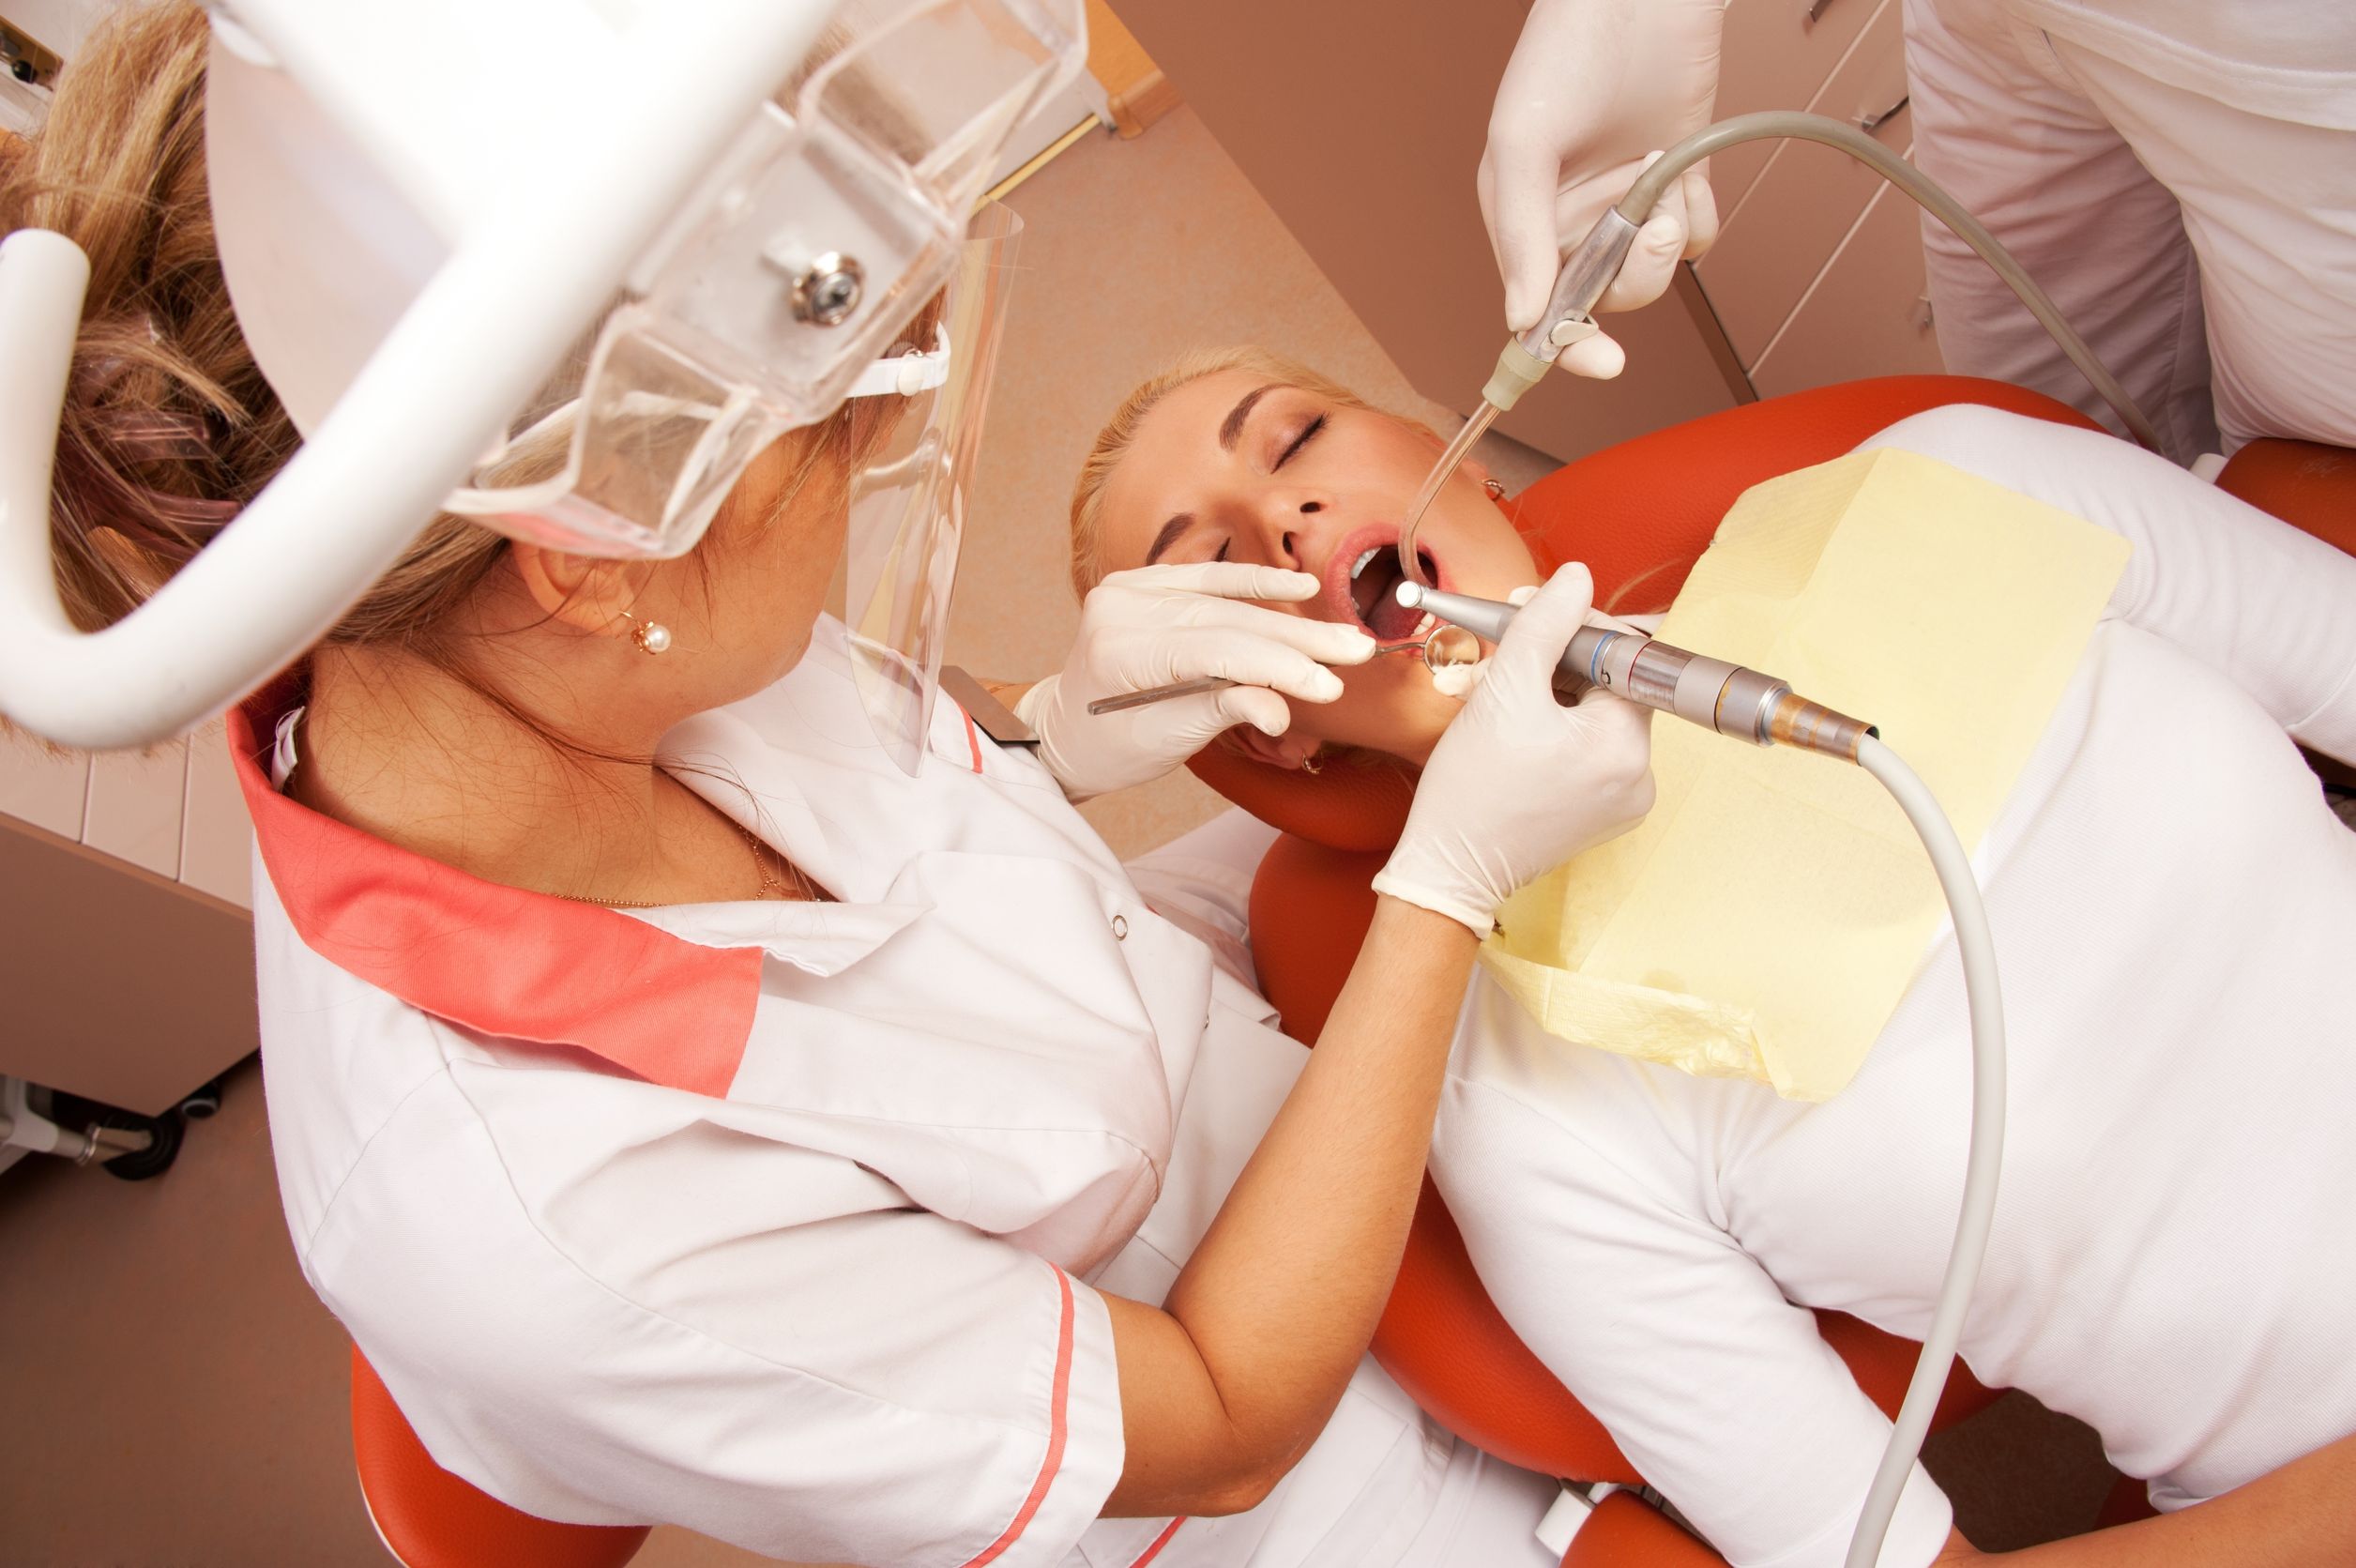 Cosmetic Dentist Melbourne FL: Services